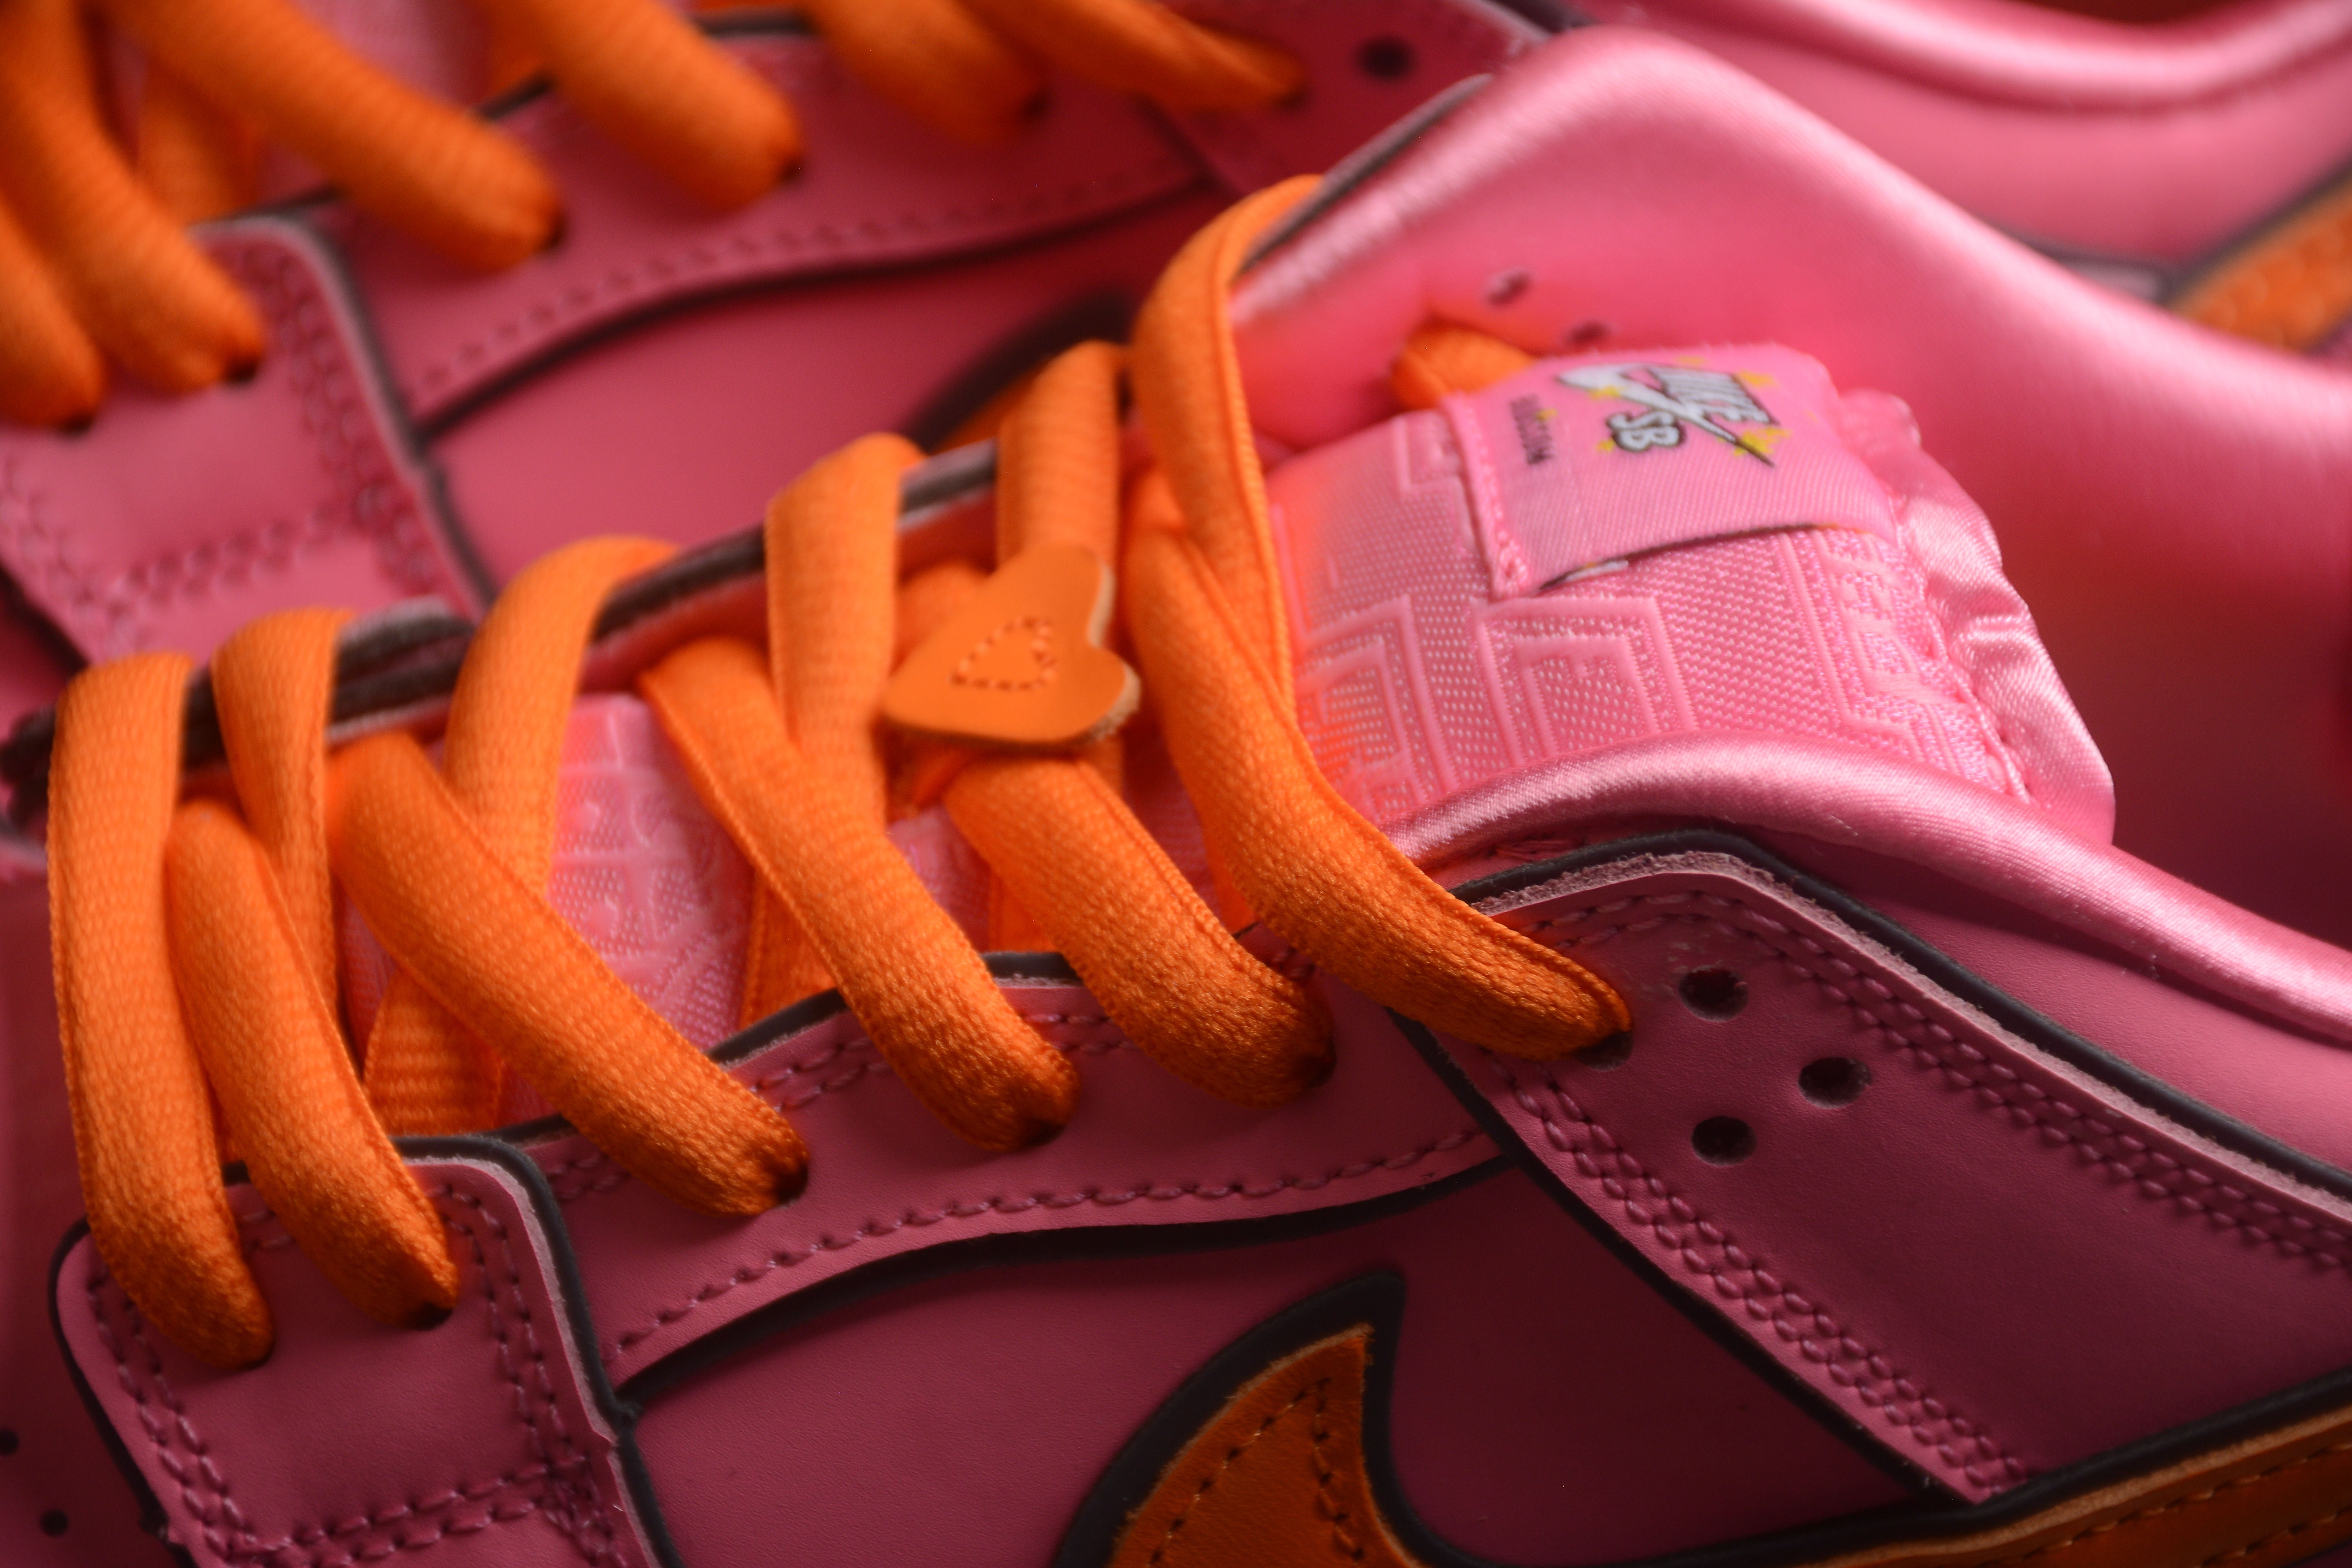 Nike SB dunk low the powerpuff girls pink shoes